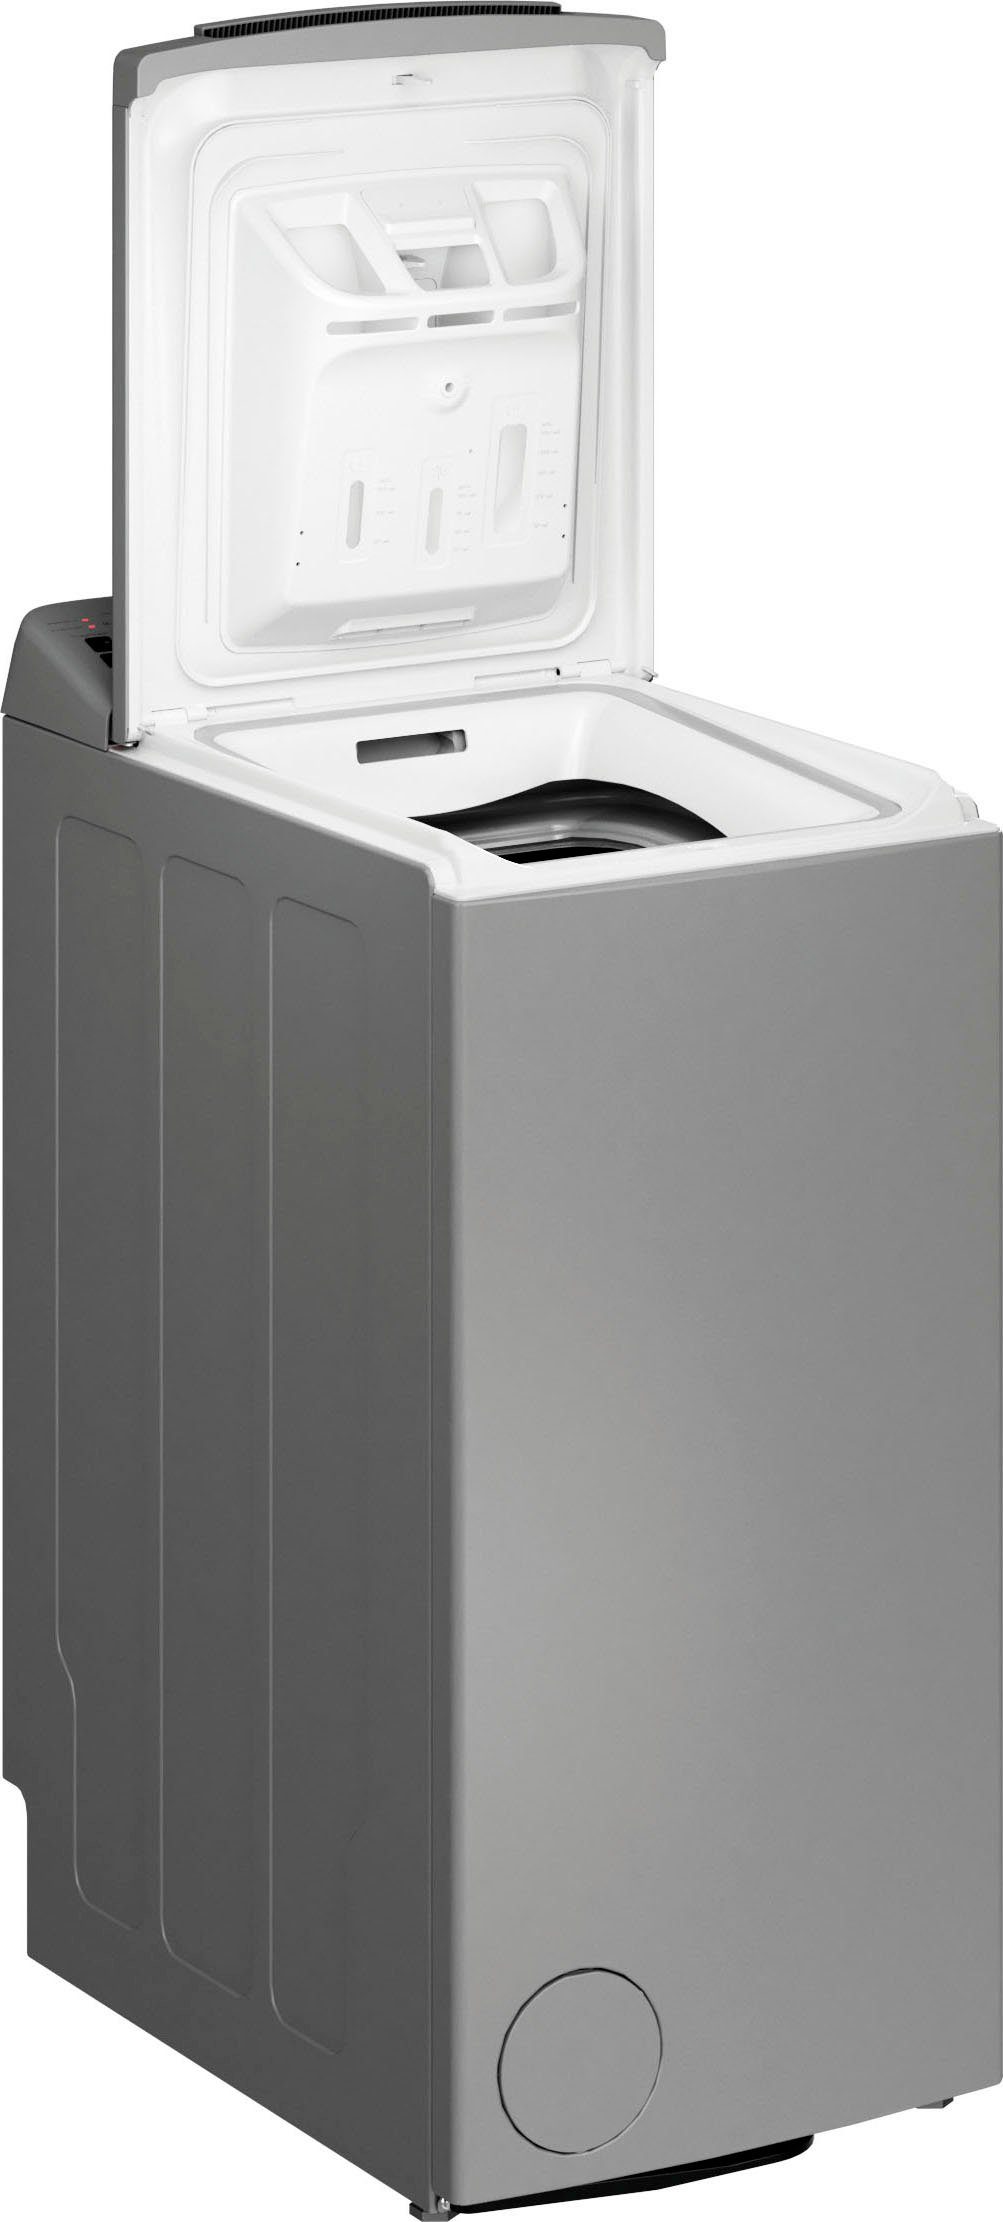 BAUKNECHT Waschmaschine Toplader U/min 6513 WMT 6,5 D4, kg, 1300